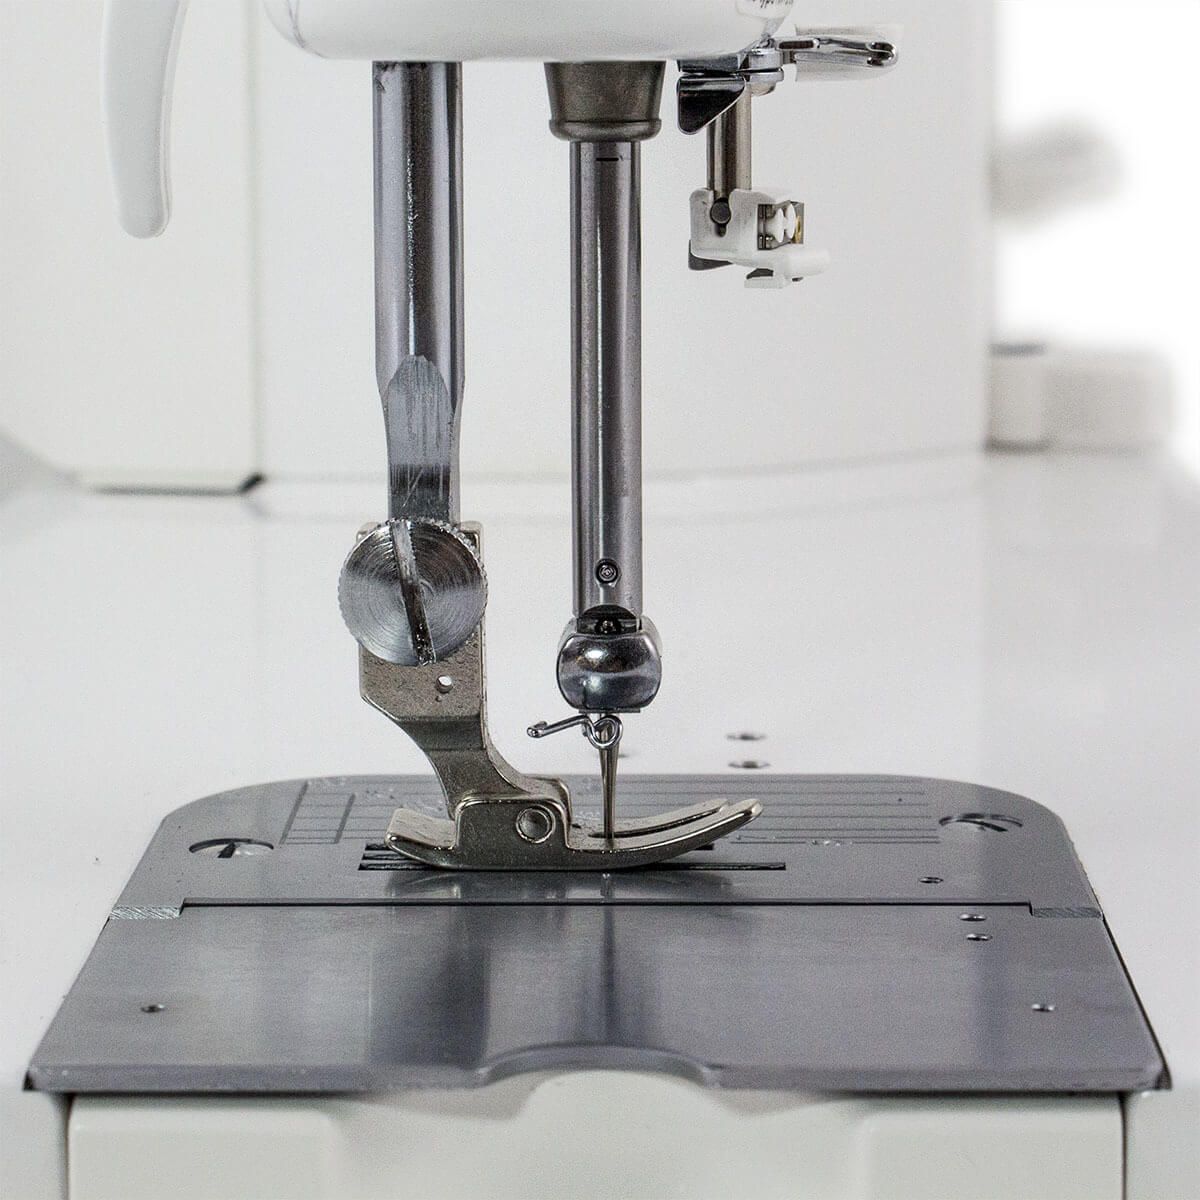 Juki TL-2000QI High Speed Sewing & Quilting Machine